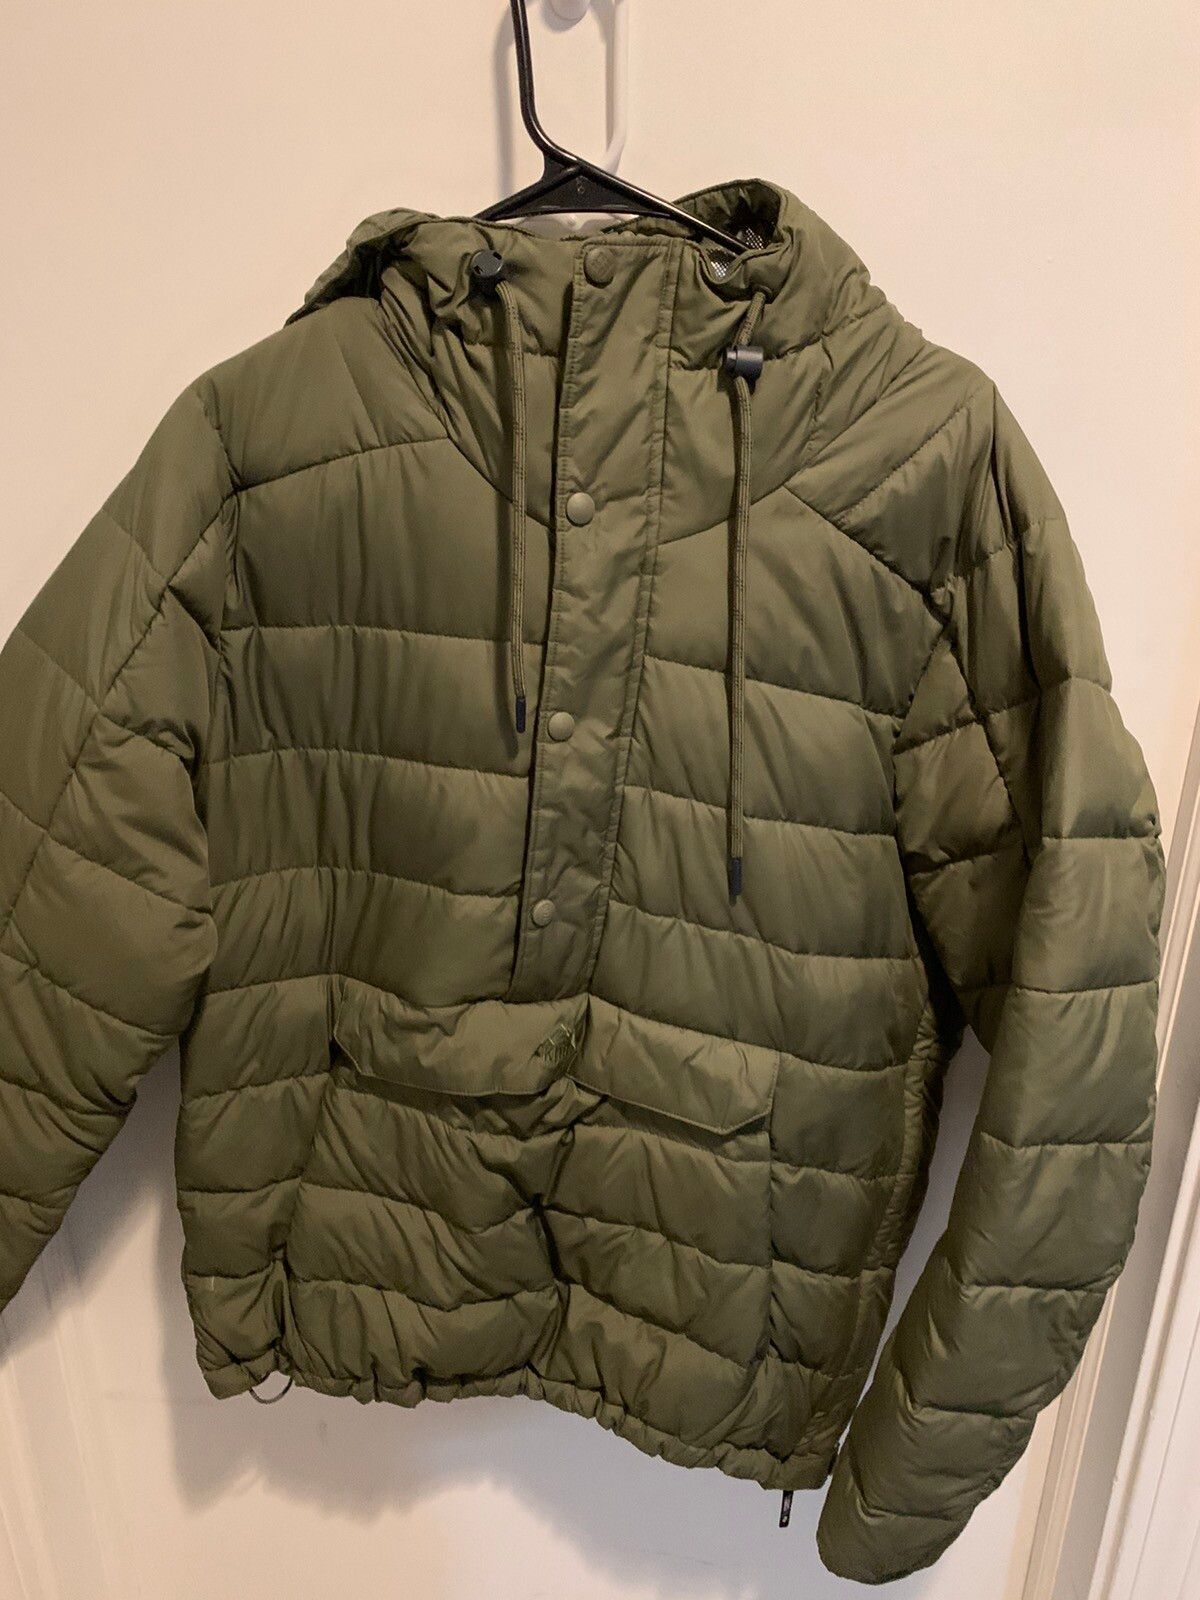 Kith Kith Columbia Half zip jacket | Grailed